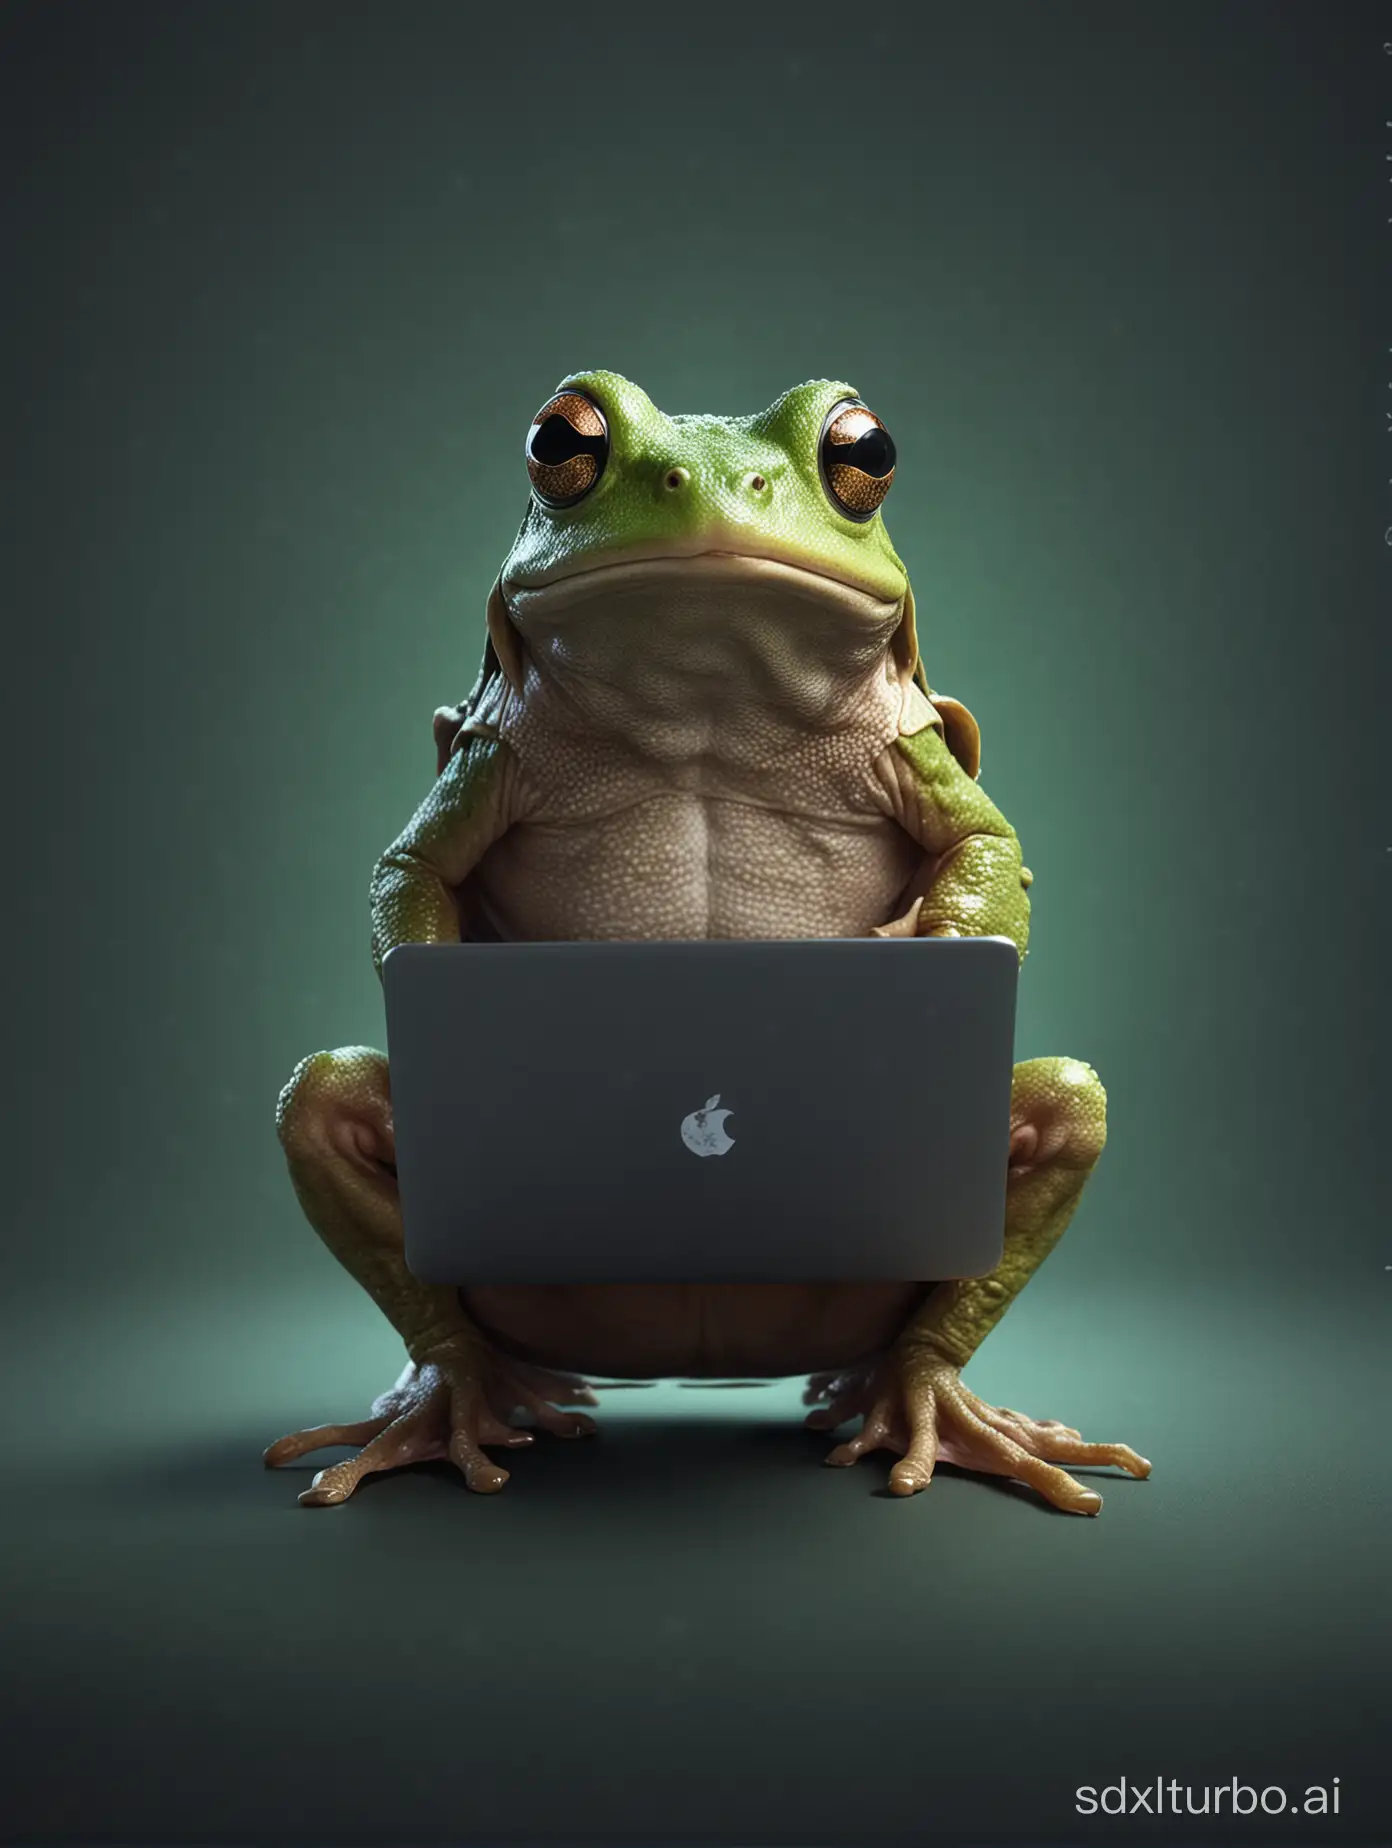 Frog-Hacker-with-Cybernetic-Enhancements